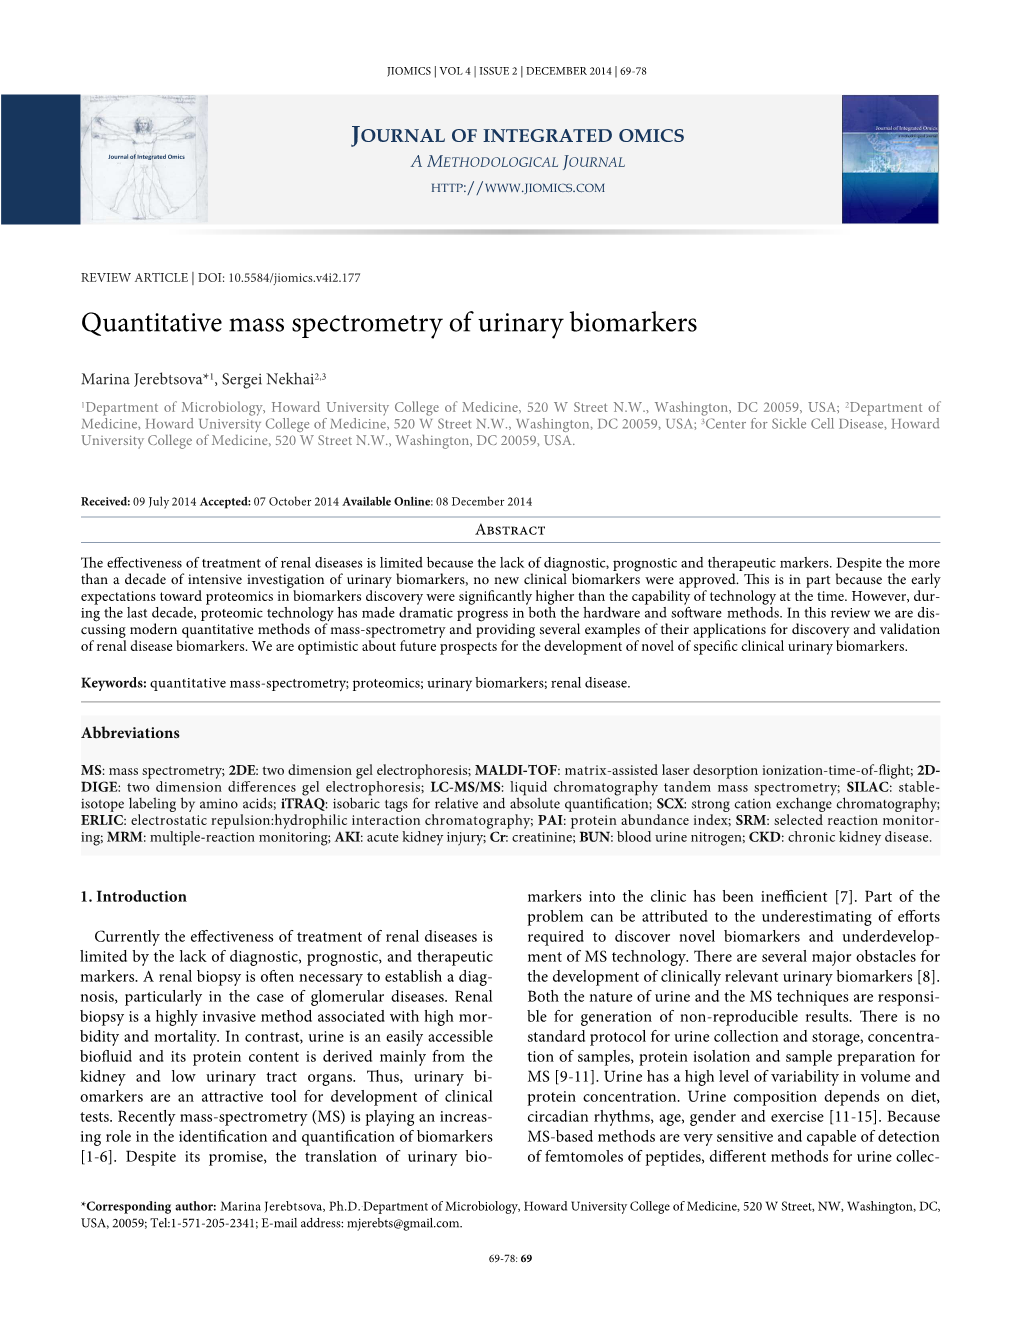 Quantitative Mass Spectrometry of Urinary Biomarkers